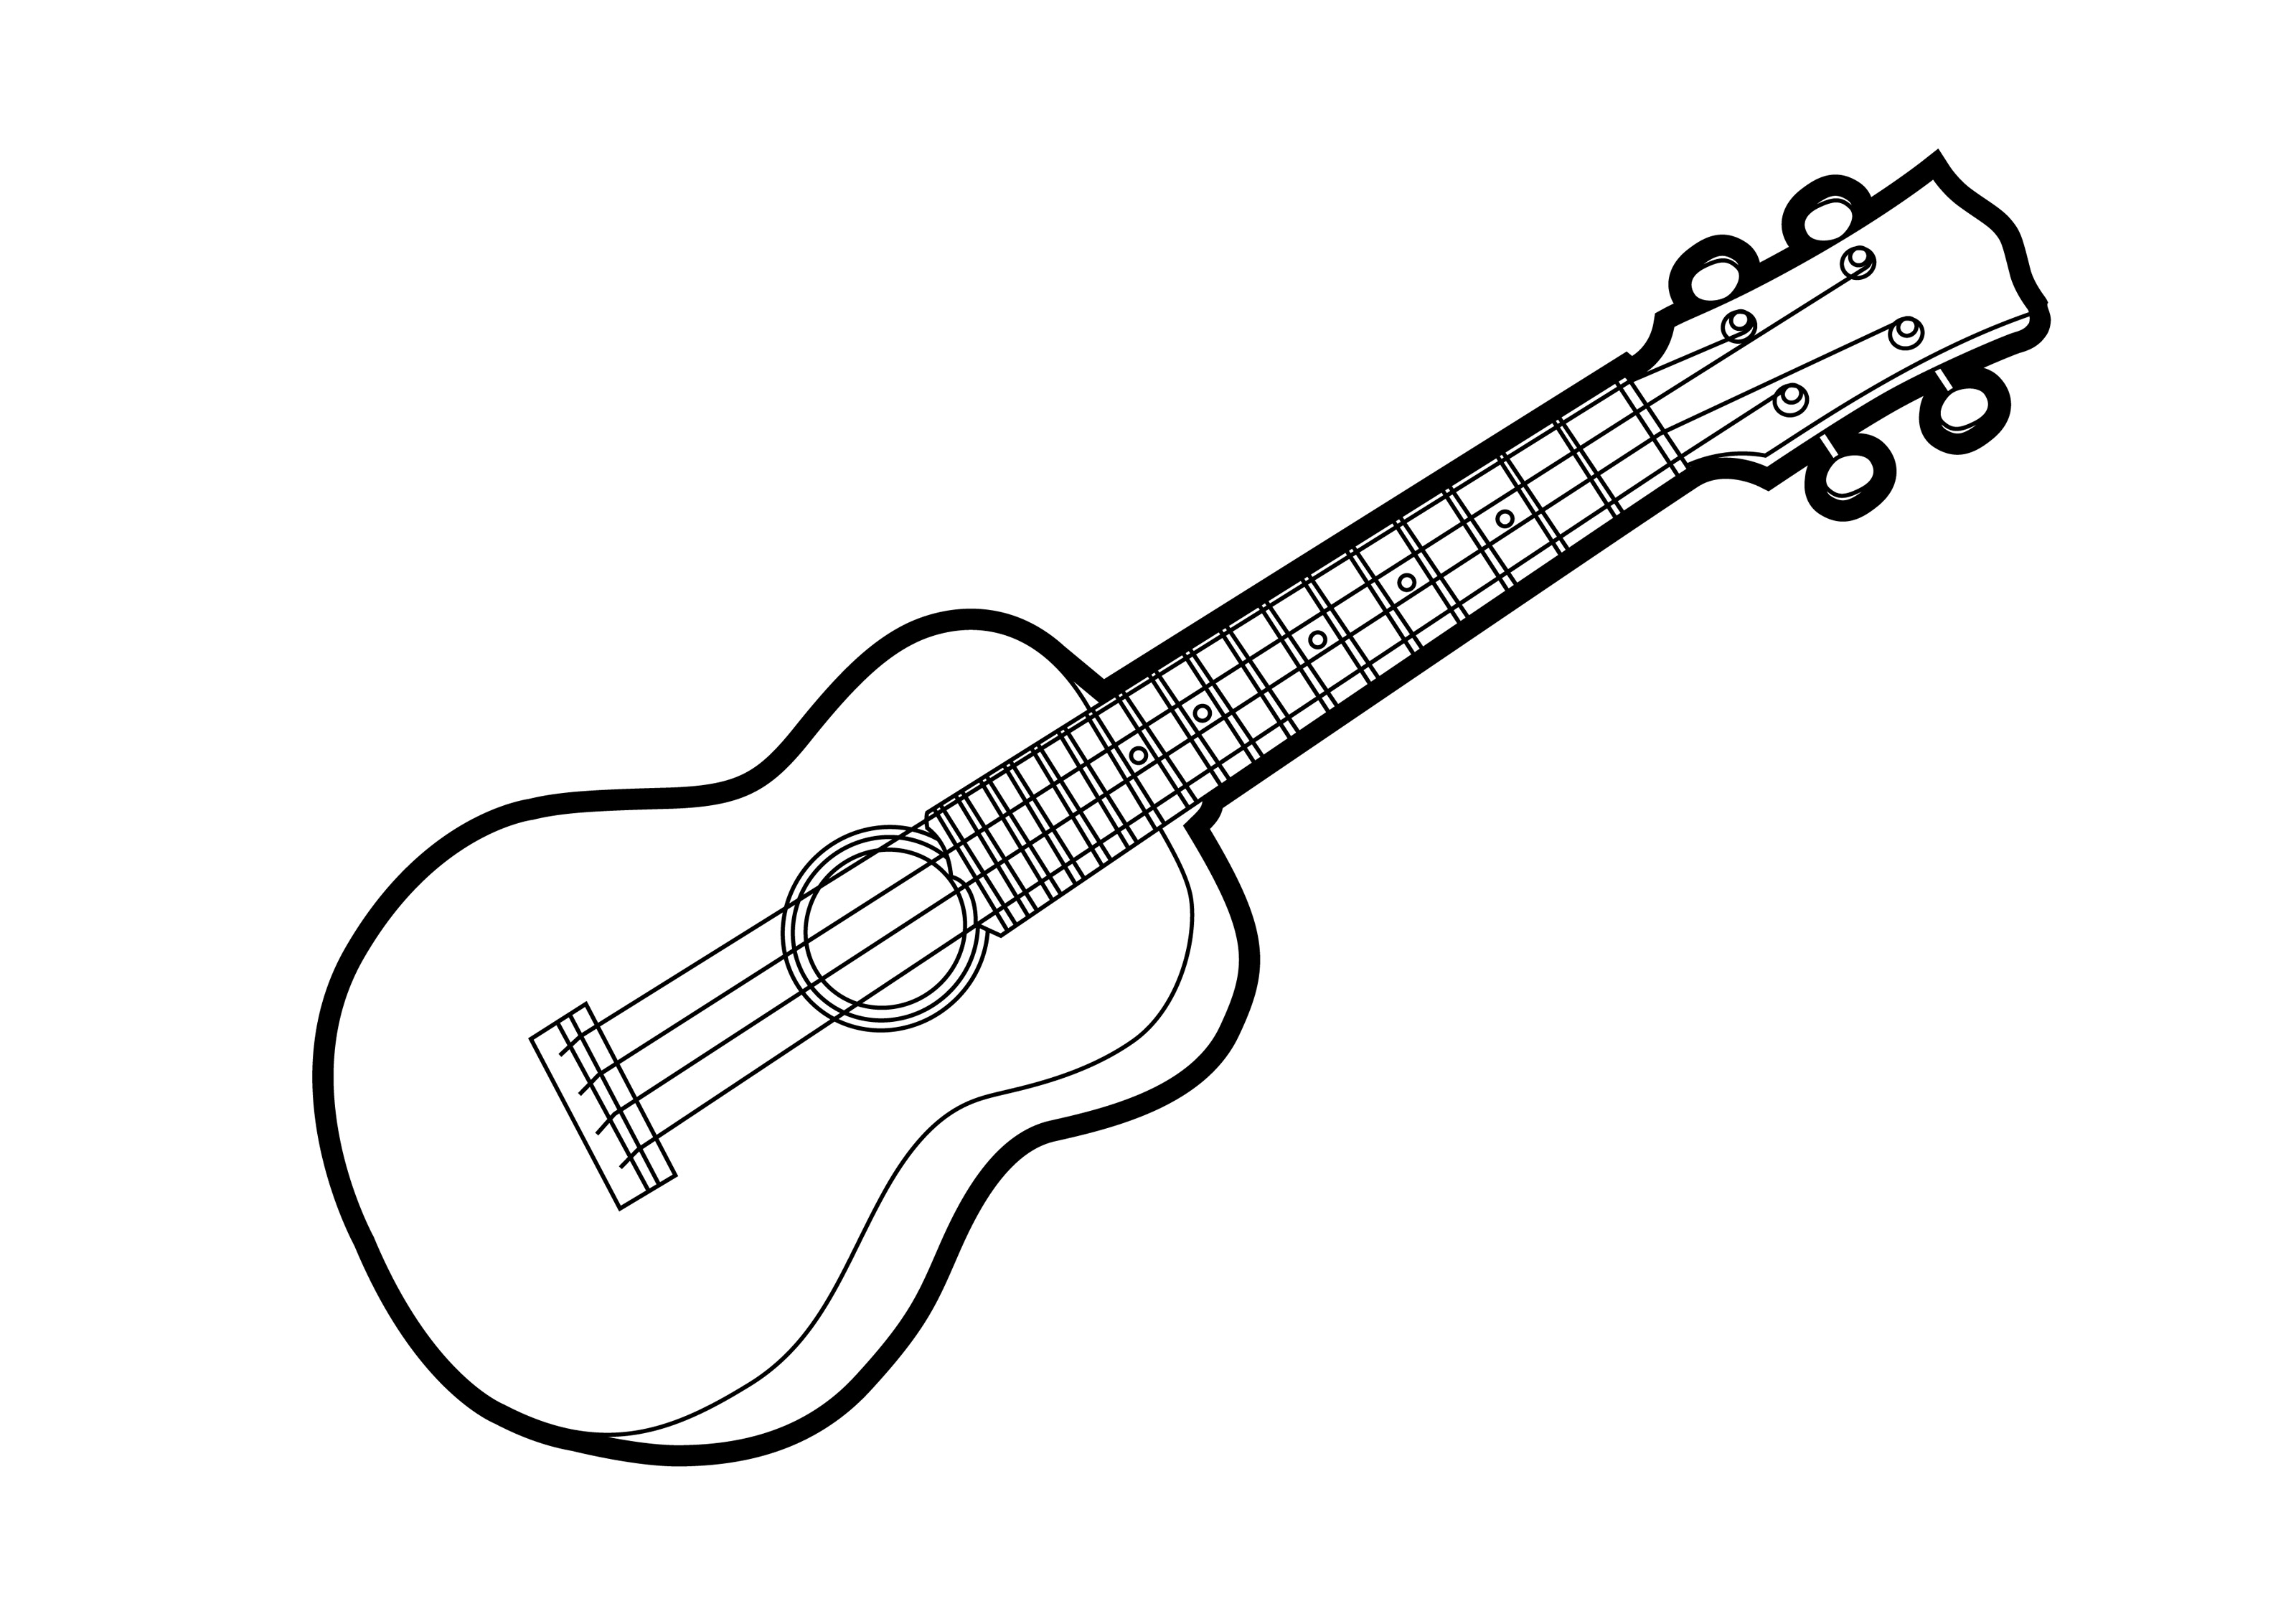 ukuleleoutlinevectorillustration